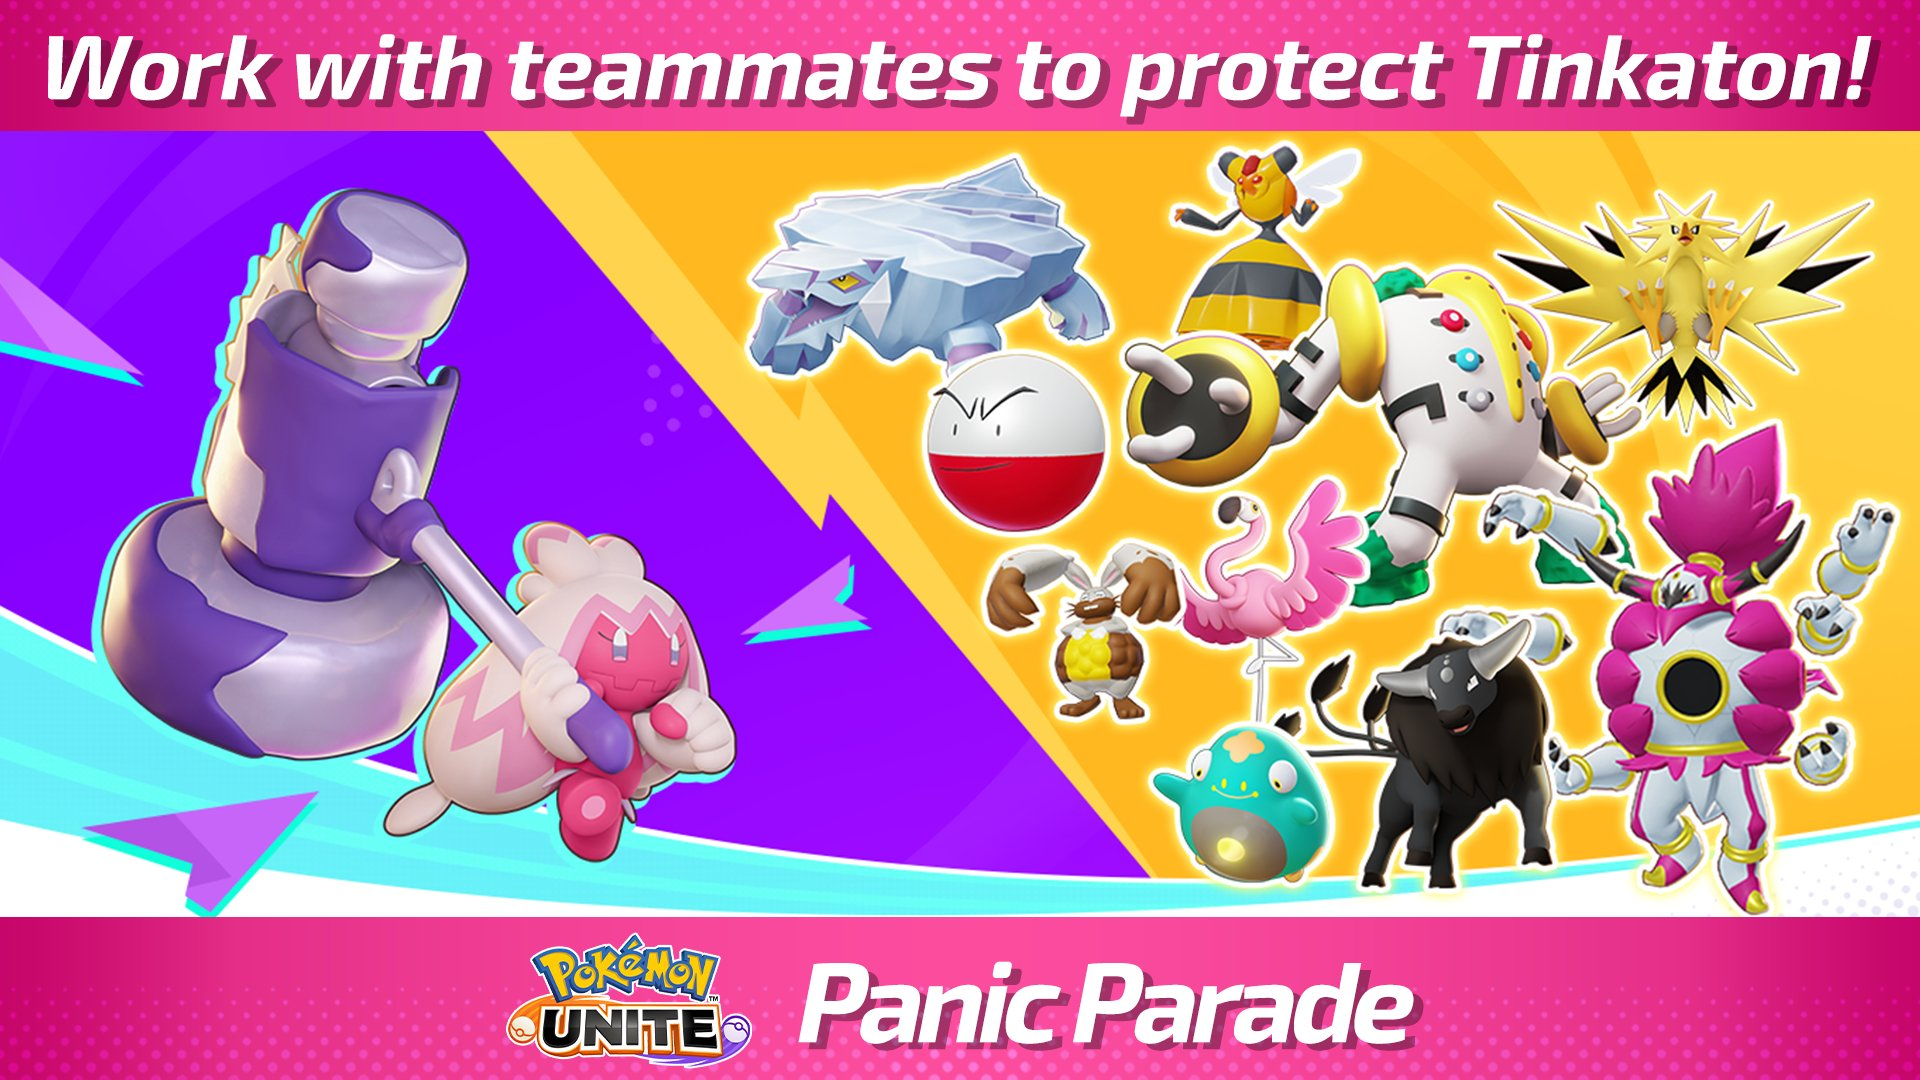 Work with teammates to protect Tinkaton in Panic Parade